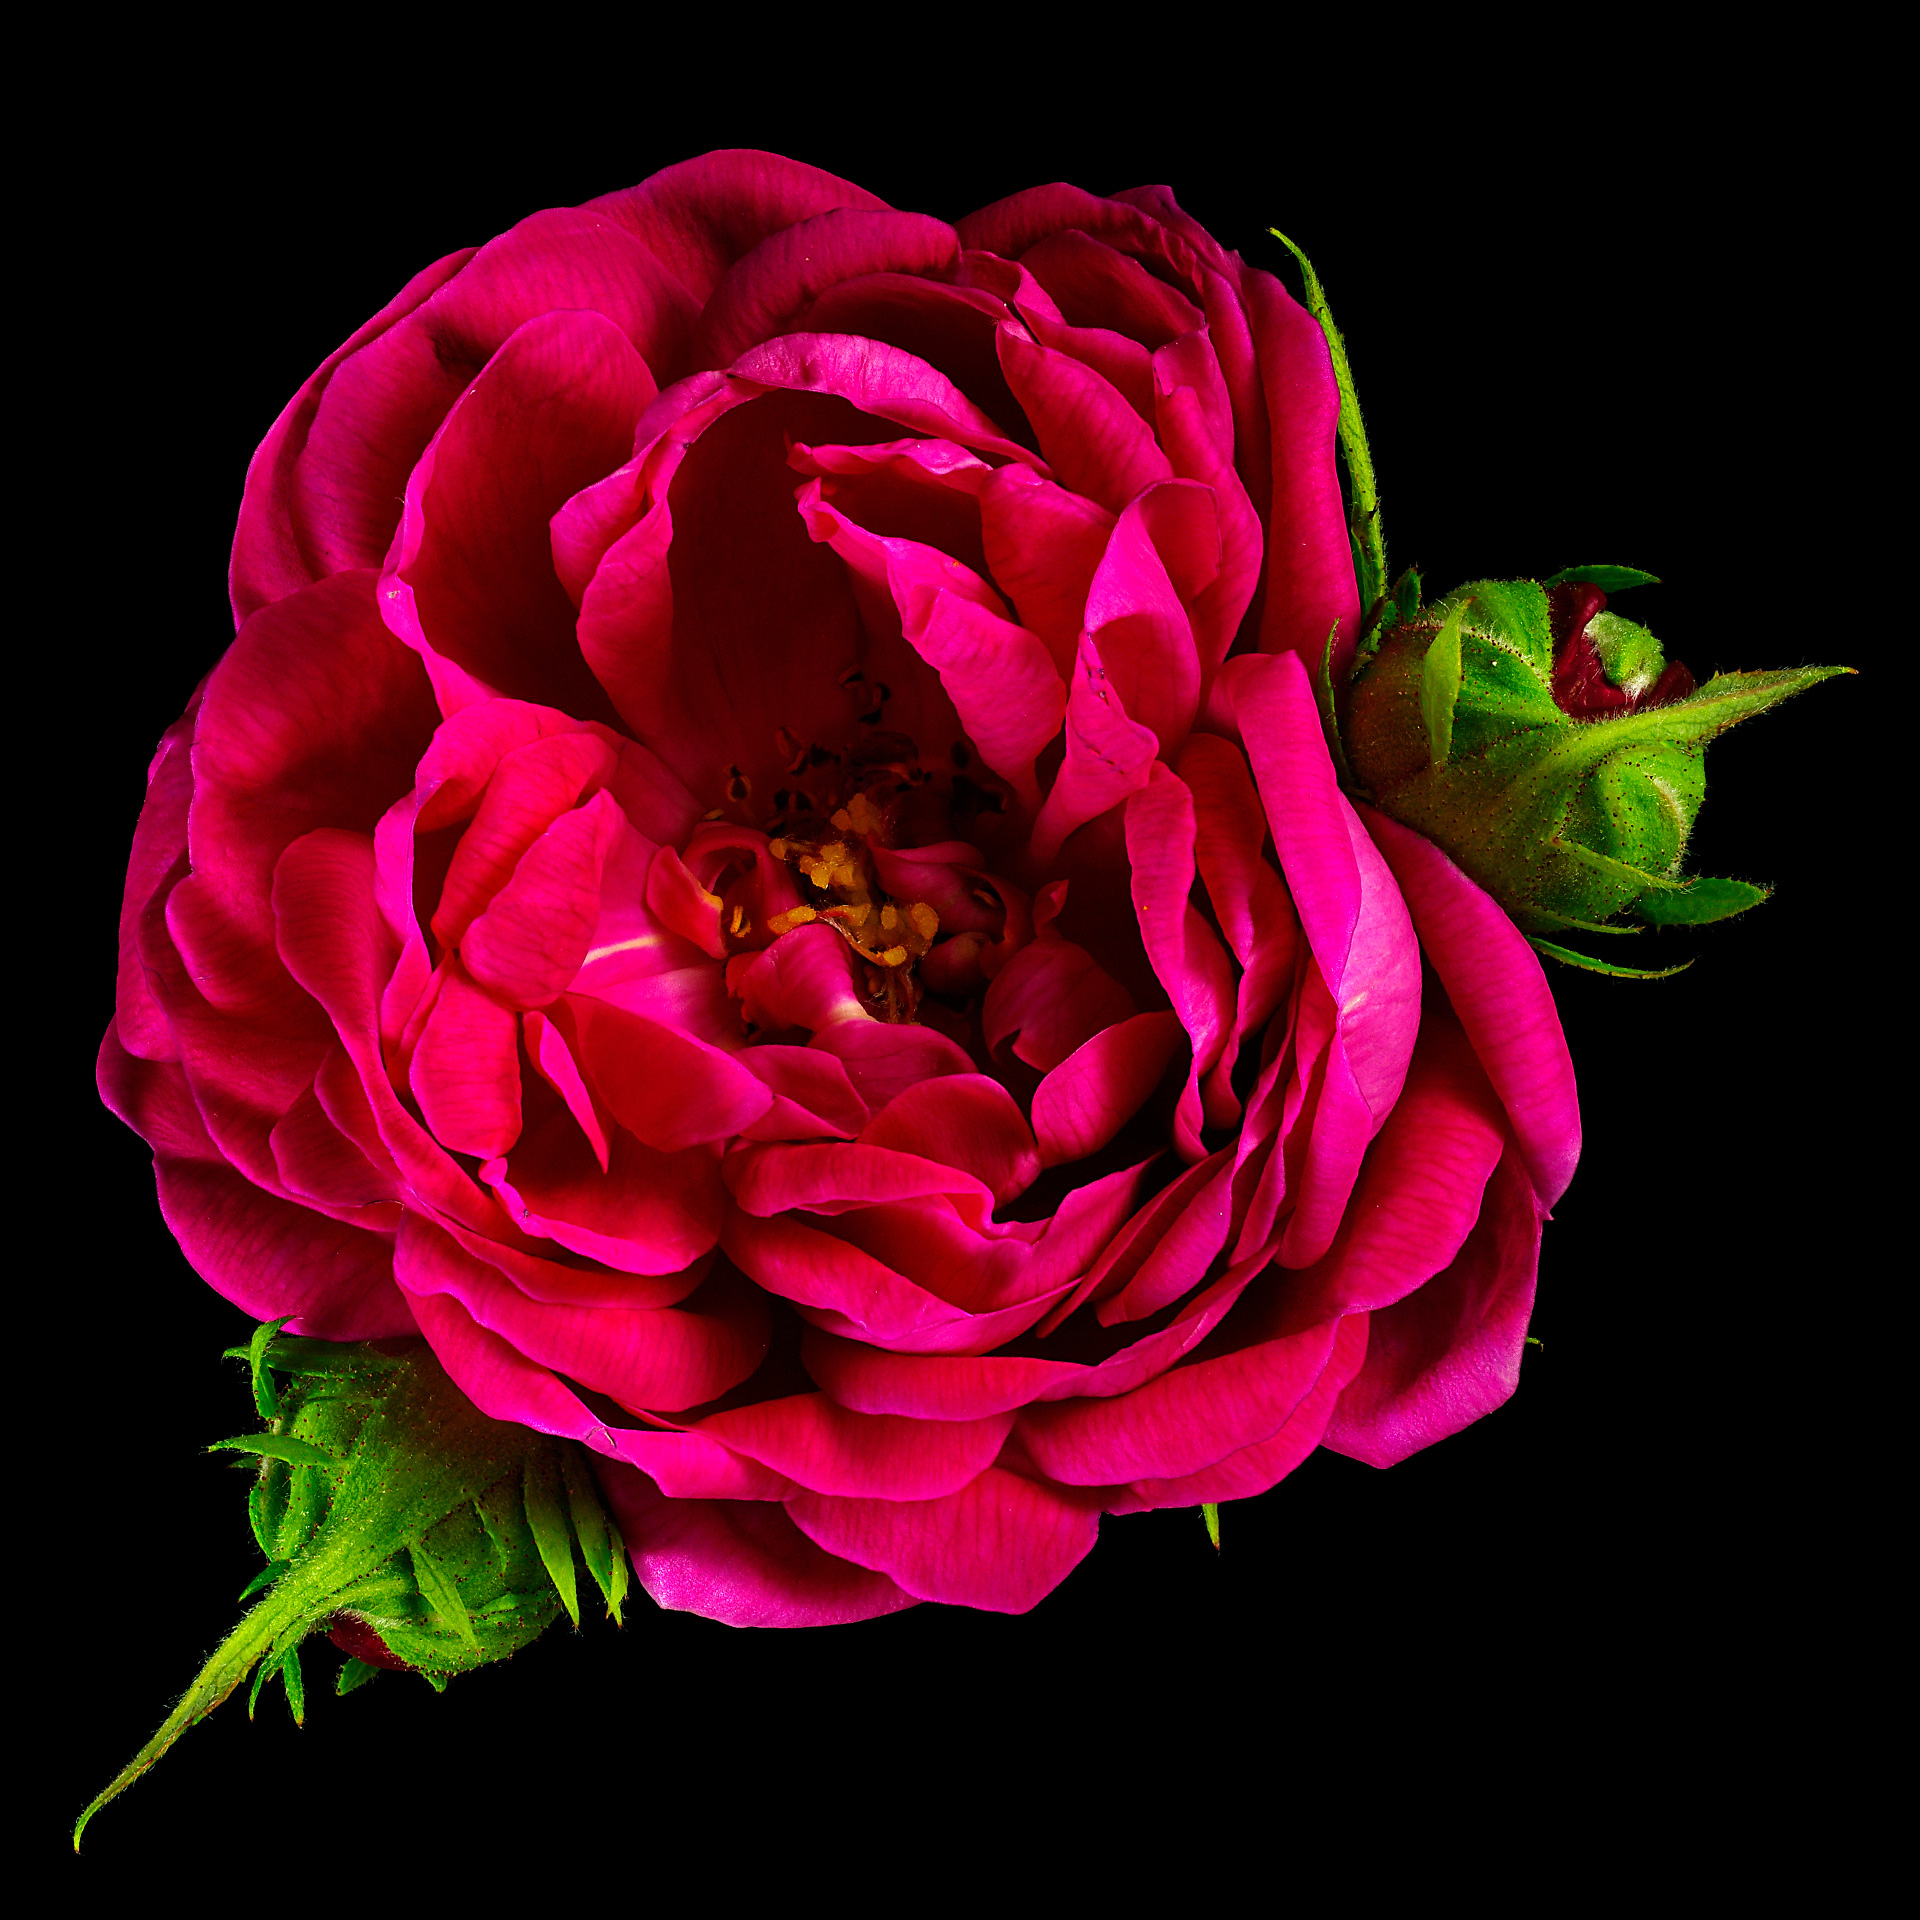 Die Damaszenerrose (Portland-Rose): Rosa x damascena ‚Rose de Resht‘